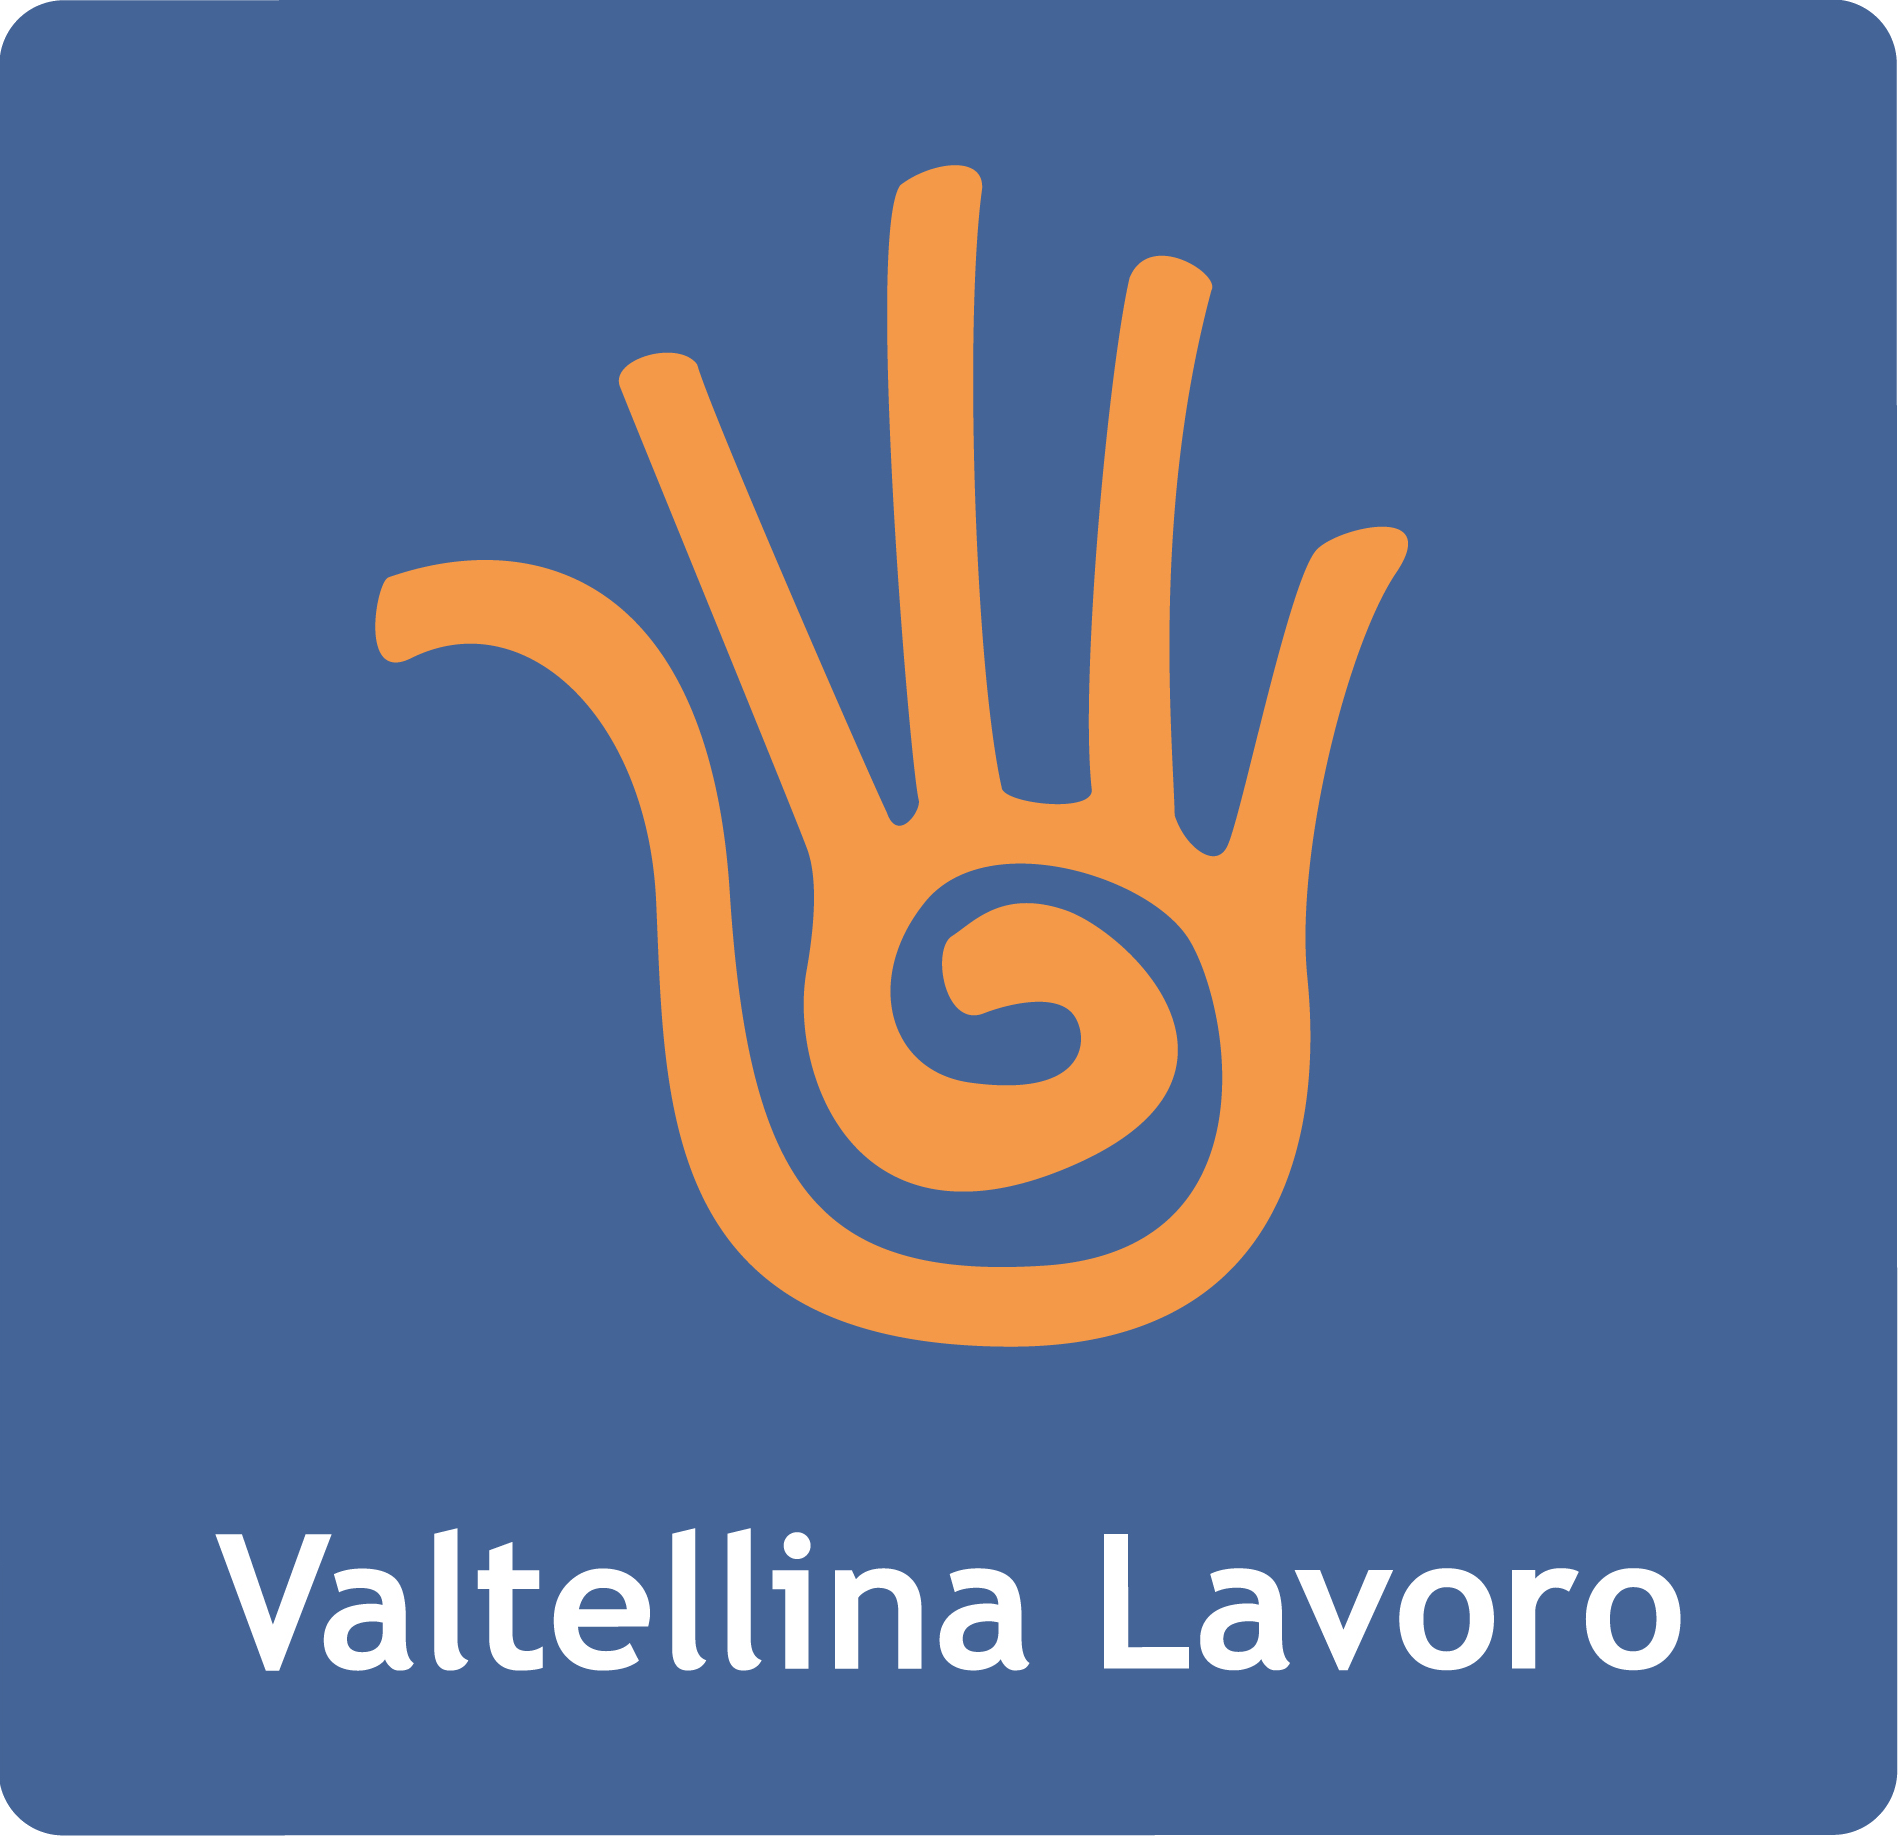 Valtellina Lavoro logo